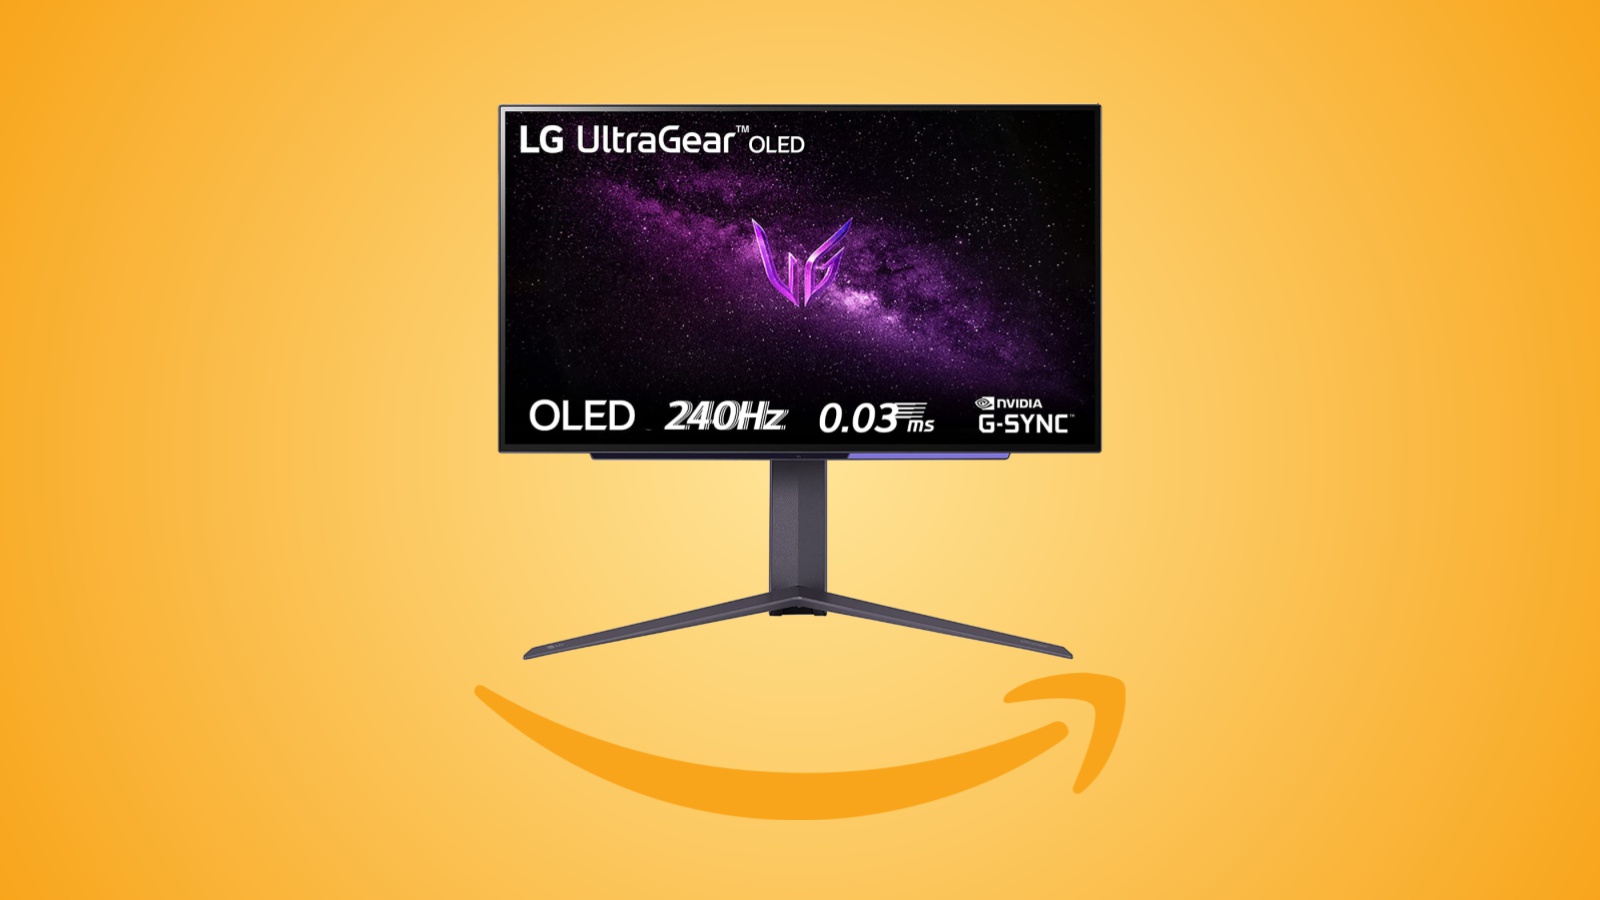 Offerte Amazon: monitor LG UltraGear Gaming OLED a 1440p/240 Hz in forte sconto al minimo storico